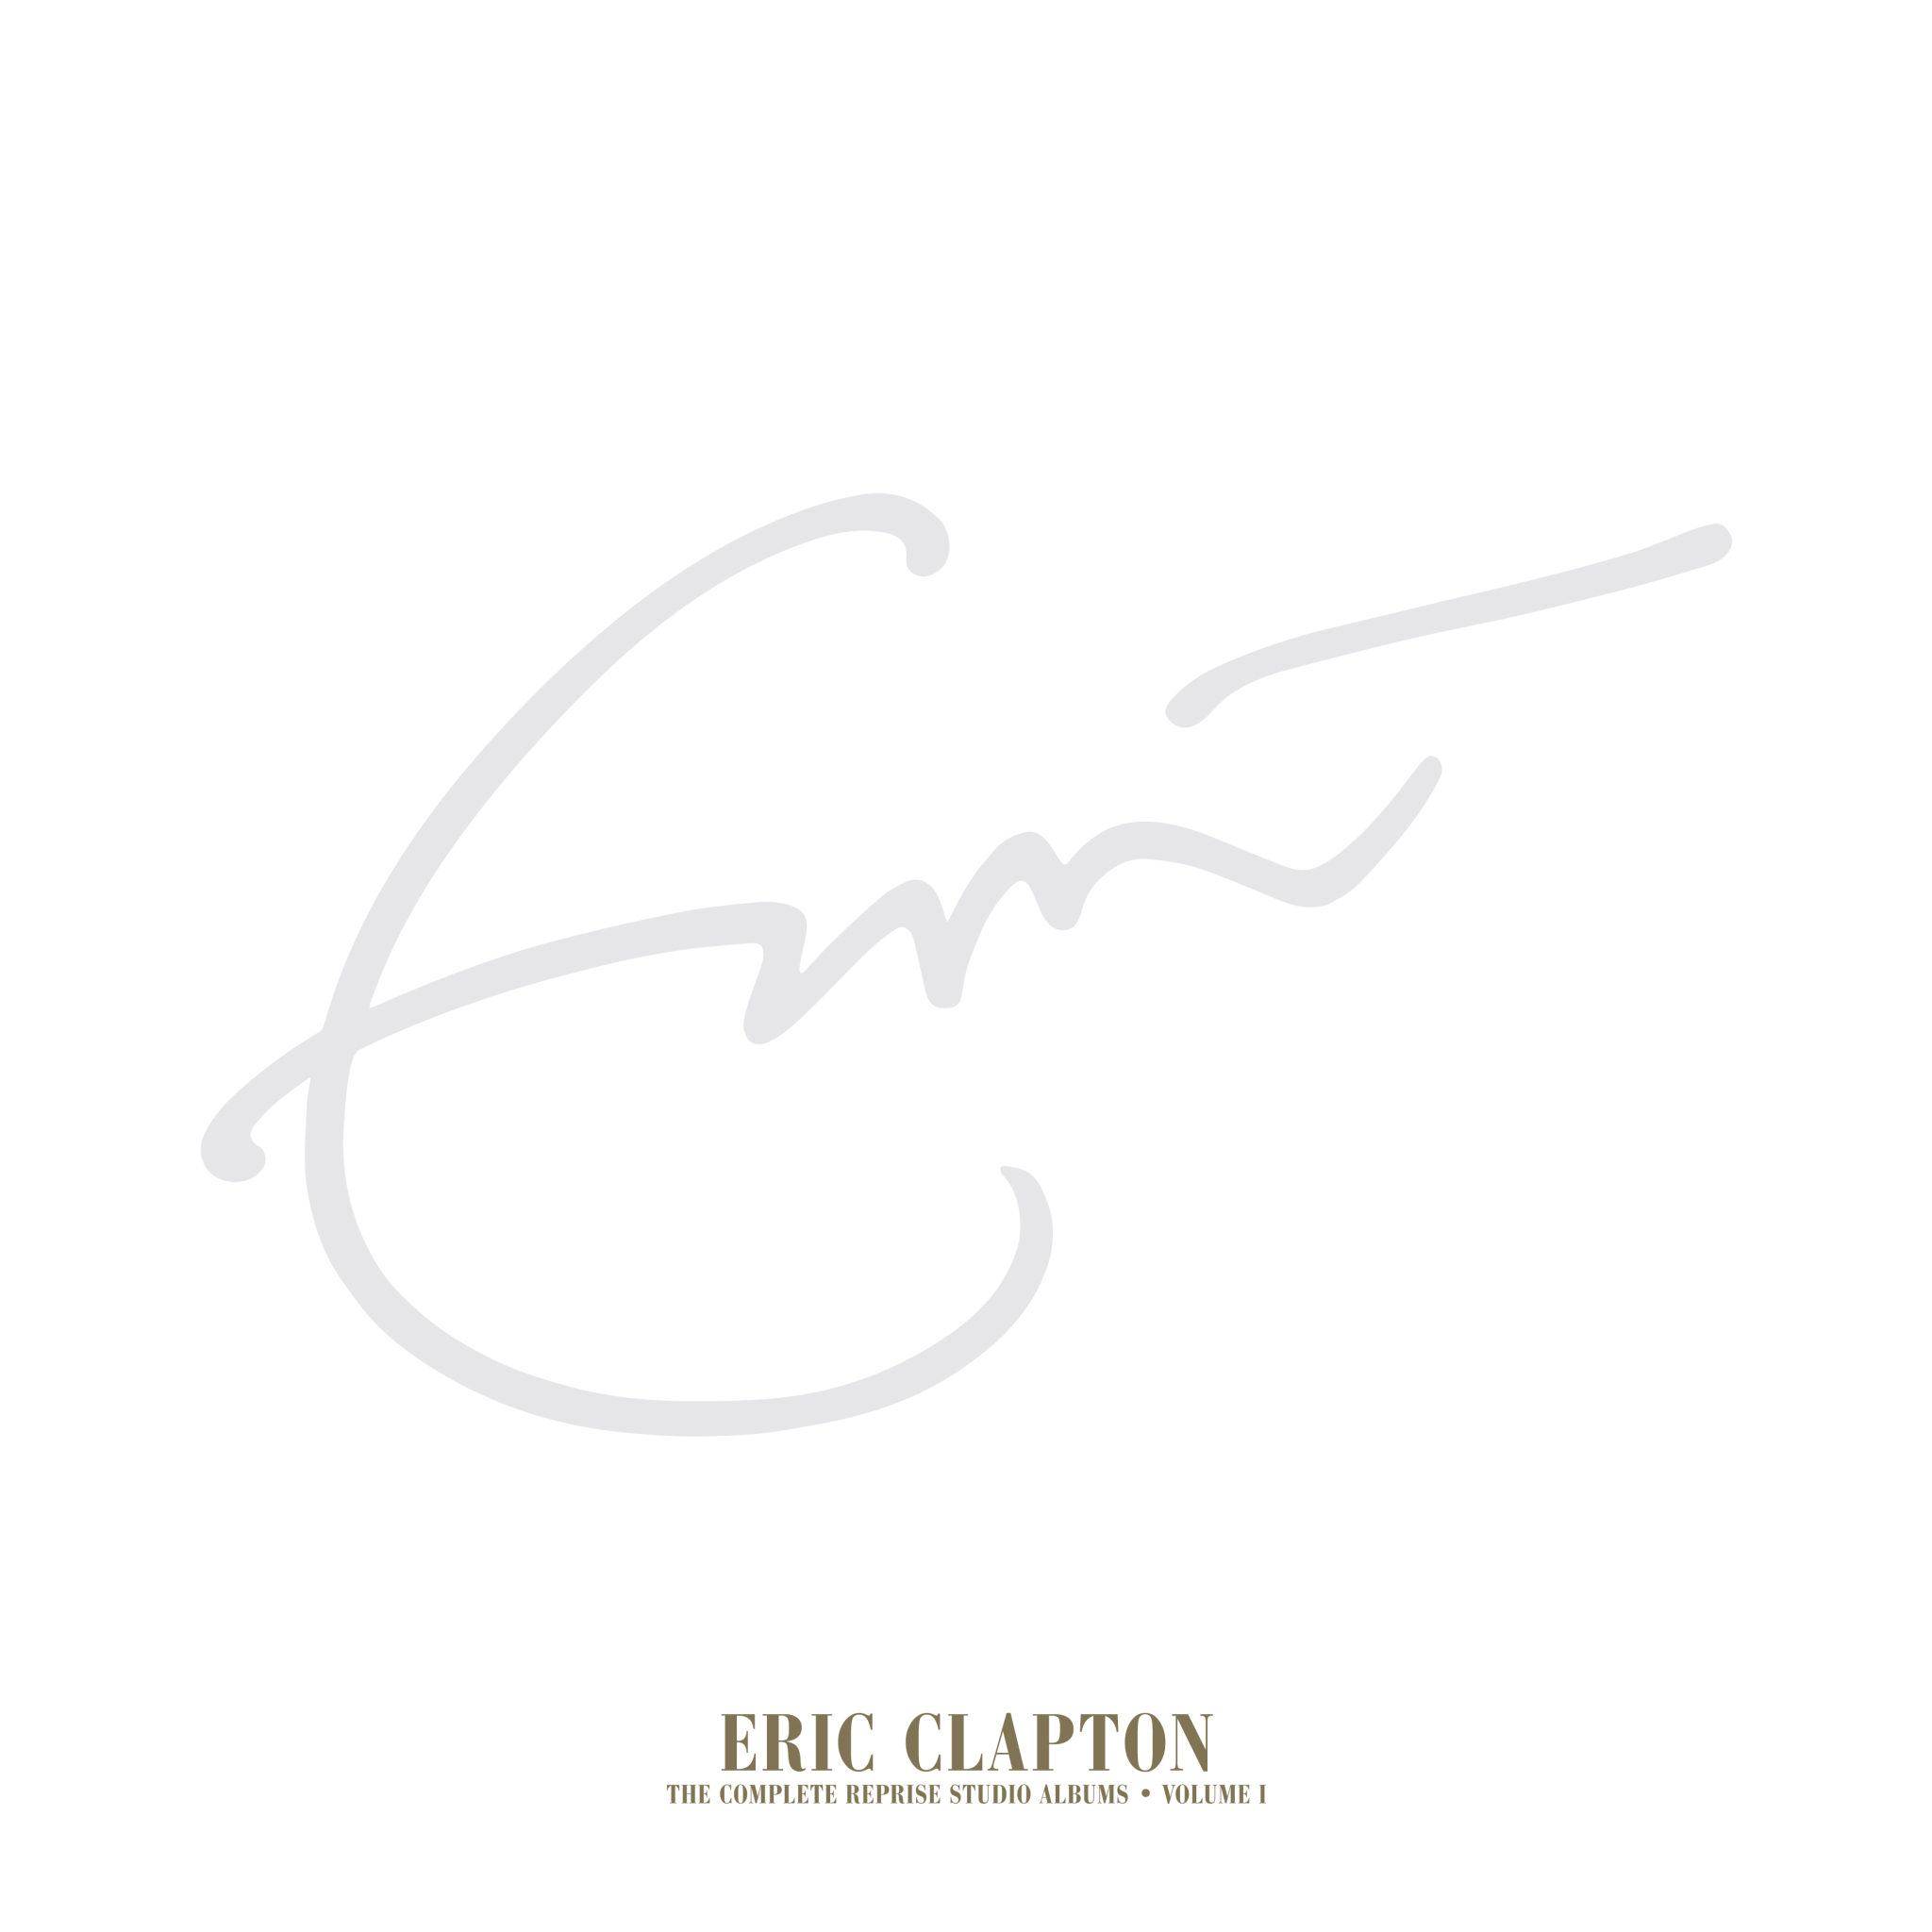 Eric Clapton / The Complete Reprise Studio Albums Volume 1 / 7LP box set